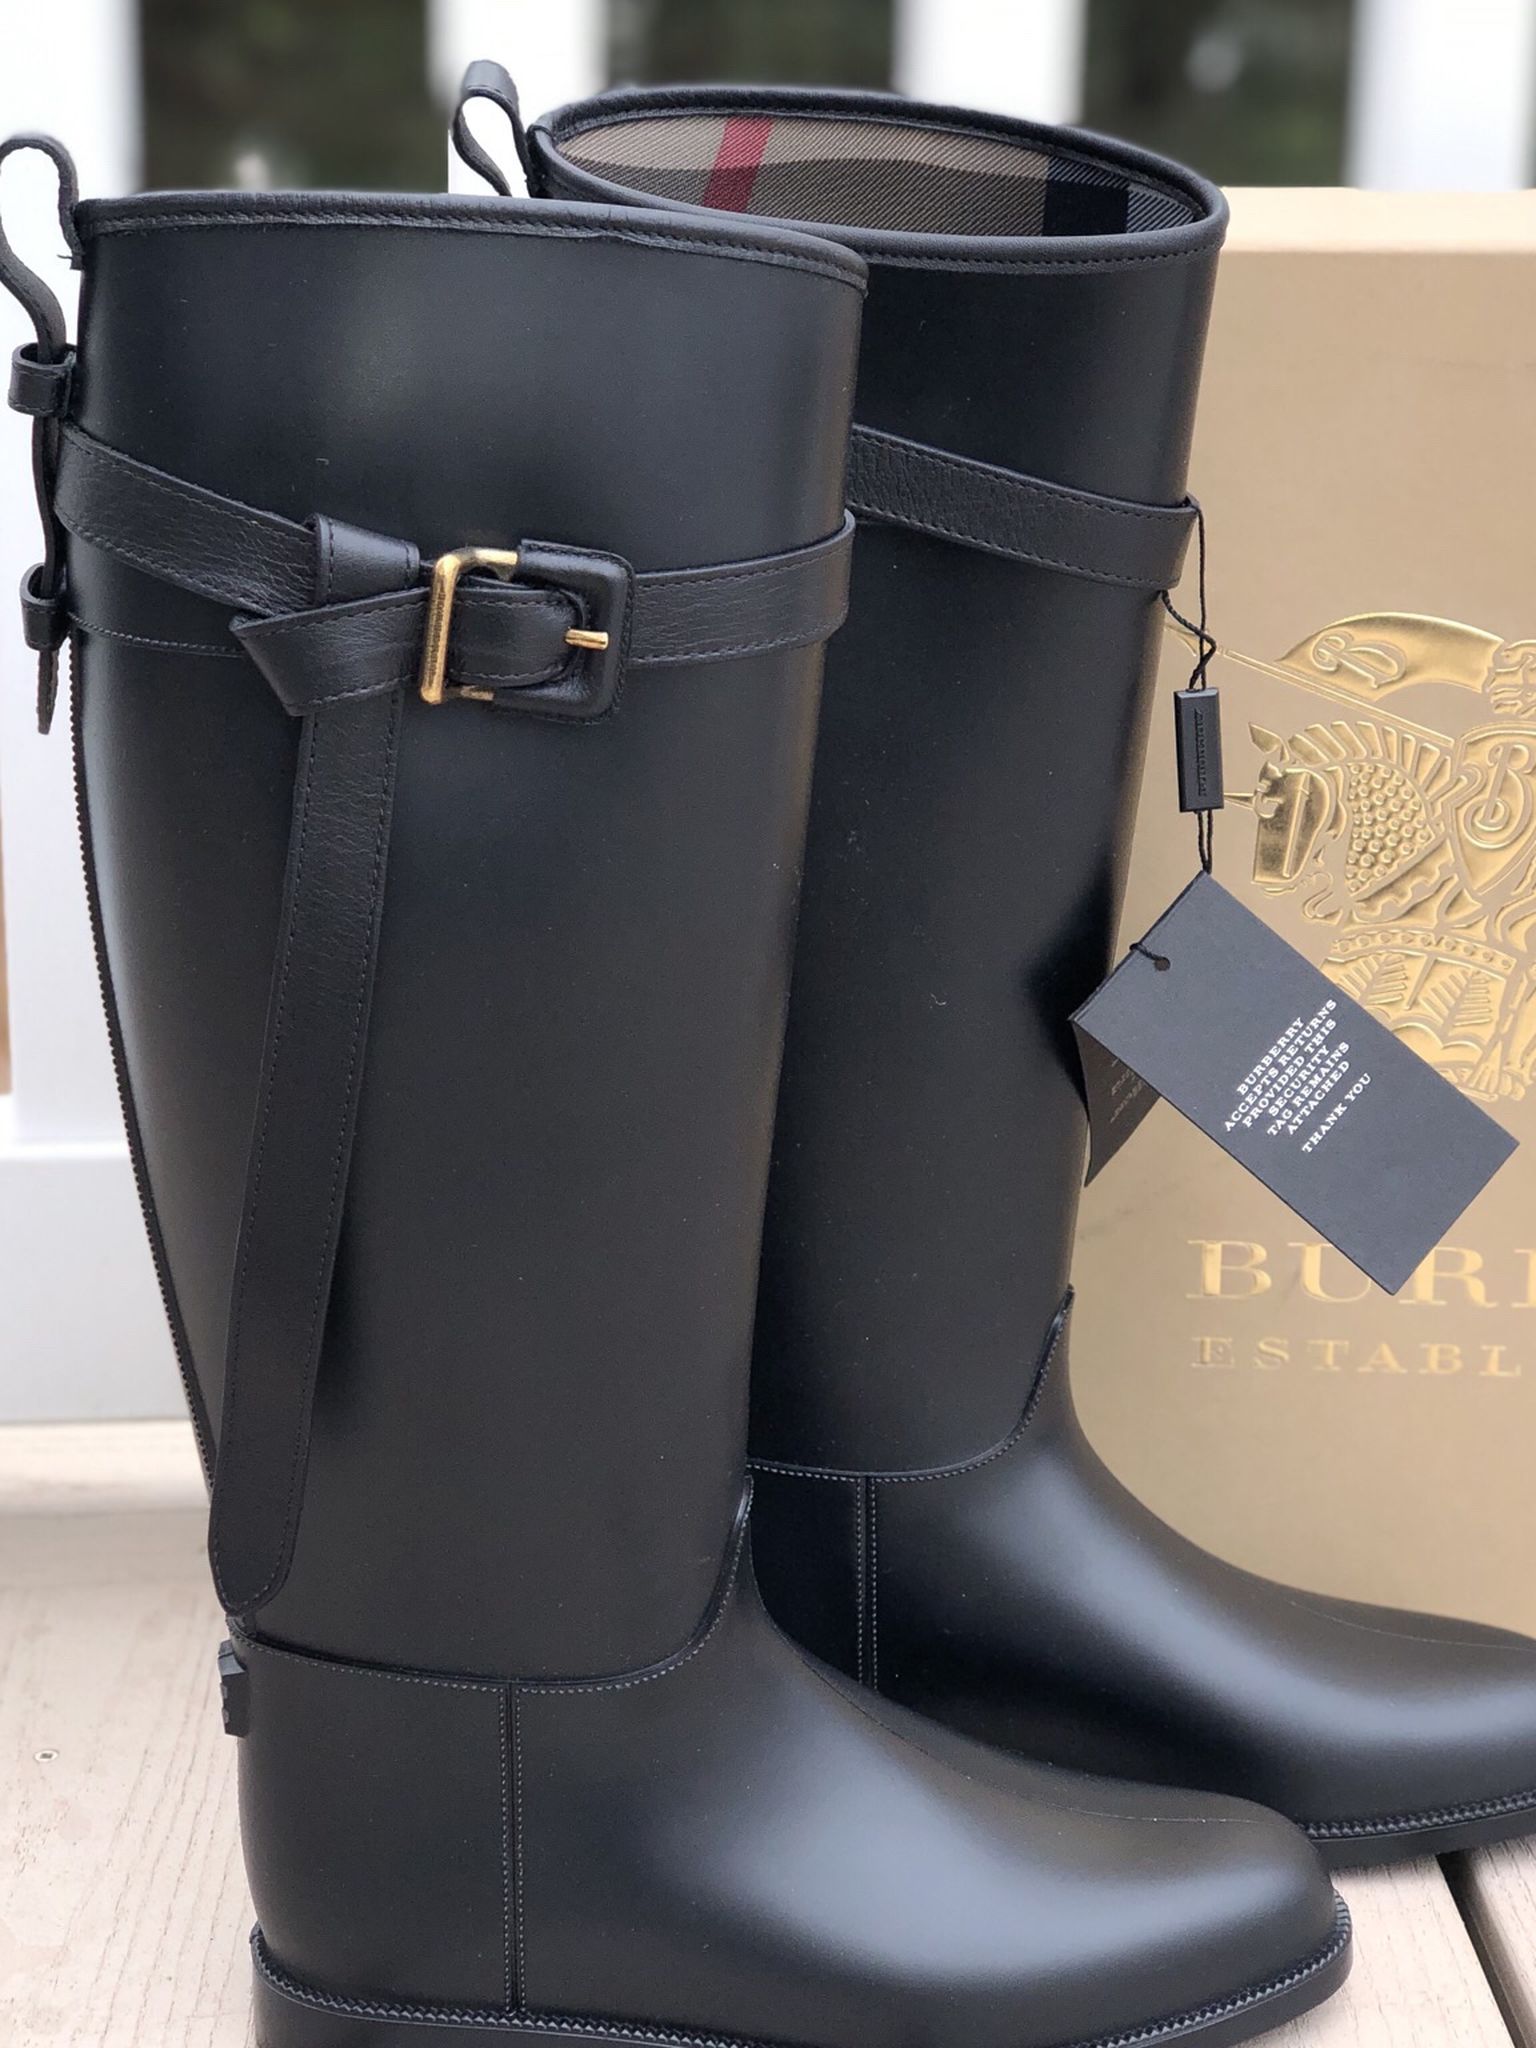 Burberry Roscot Riding Rain Boots